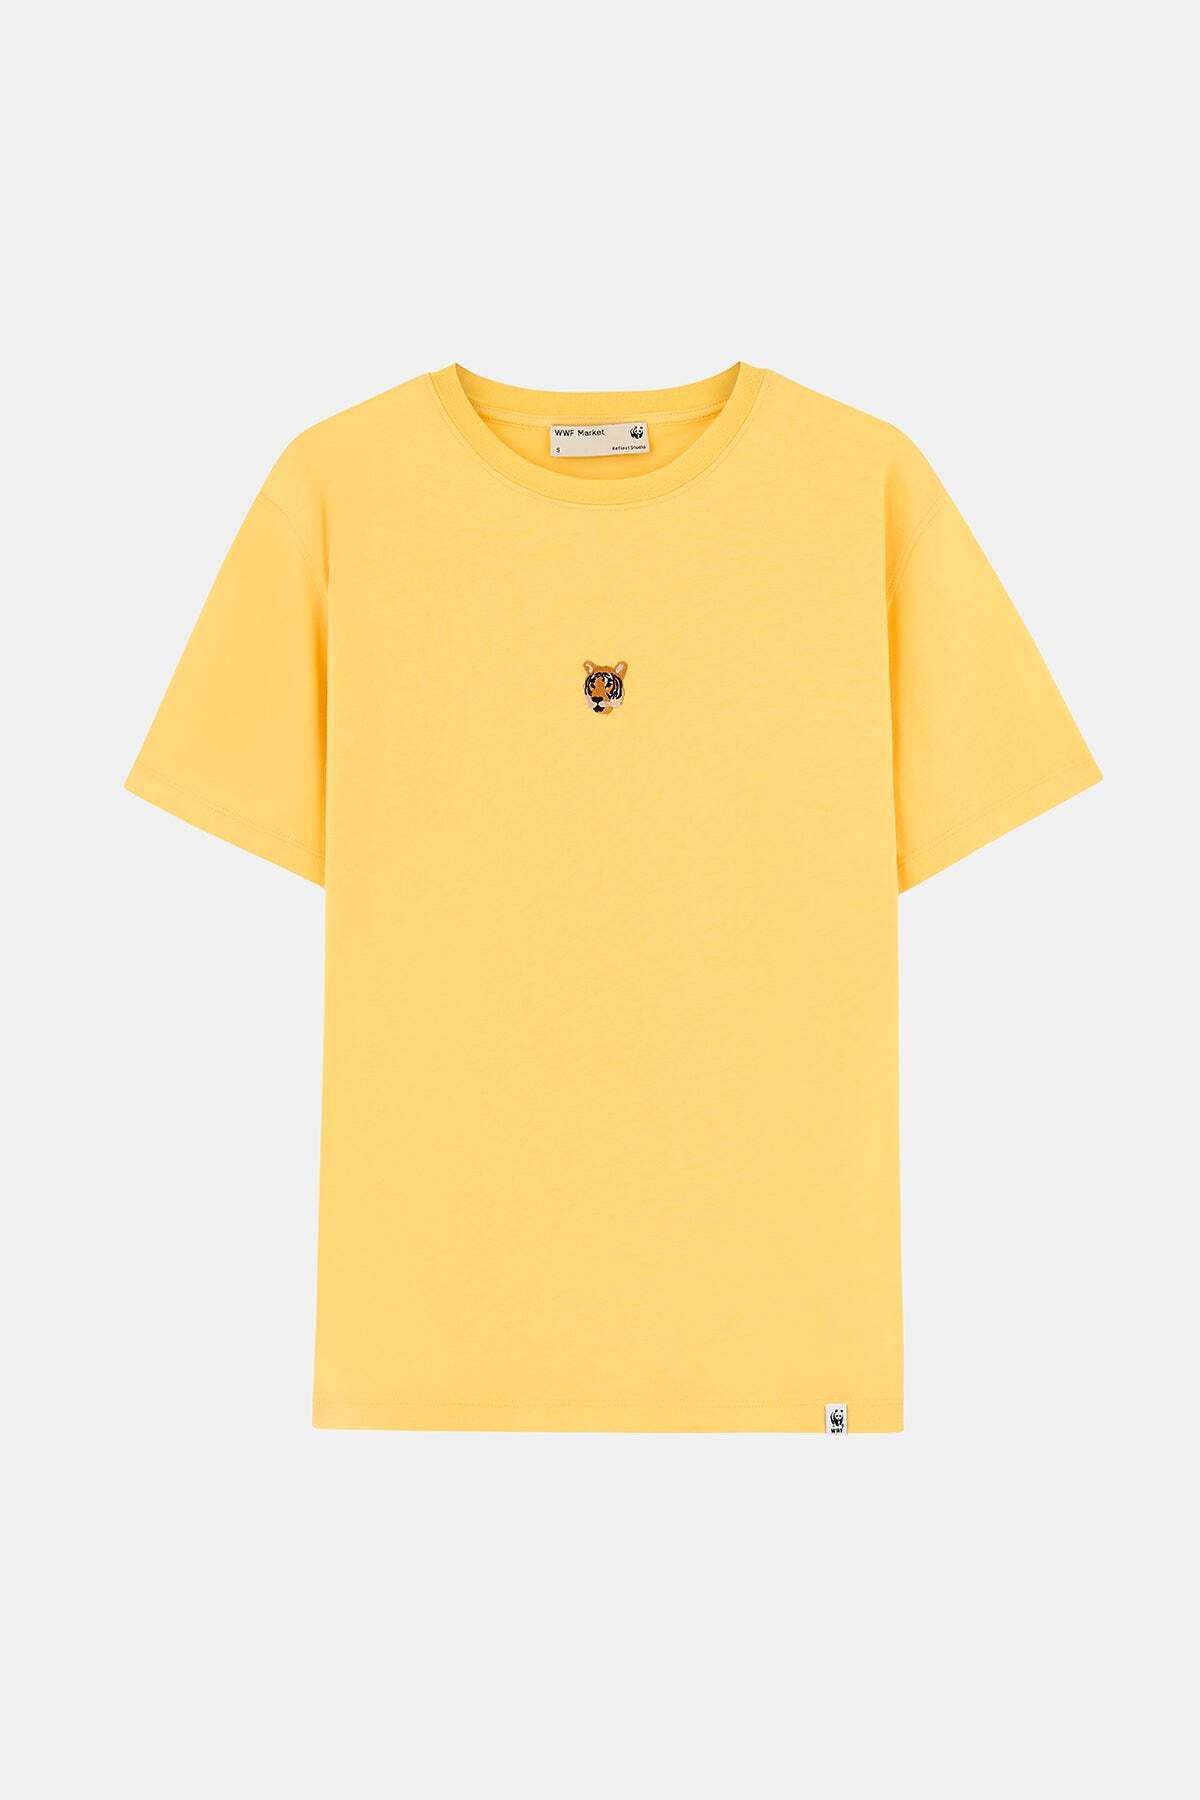 WWF Market Kaplan Supreme T-shirt - Sarı